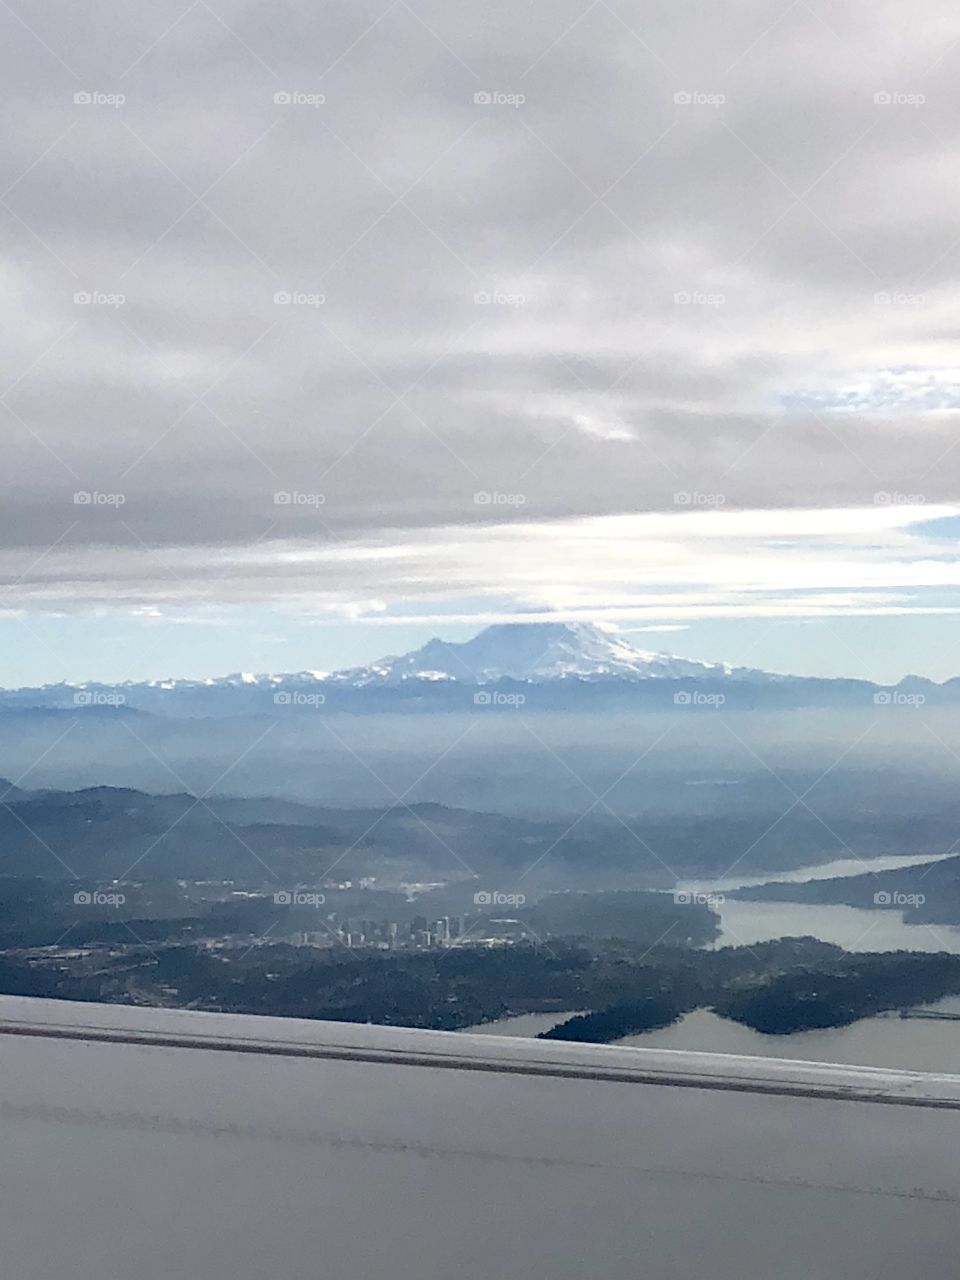 My Rainier from the plane window